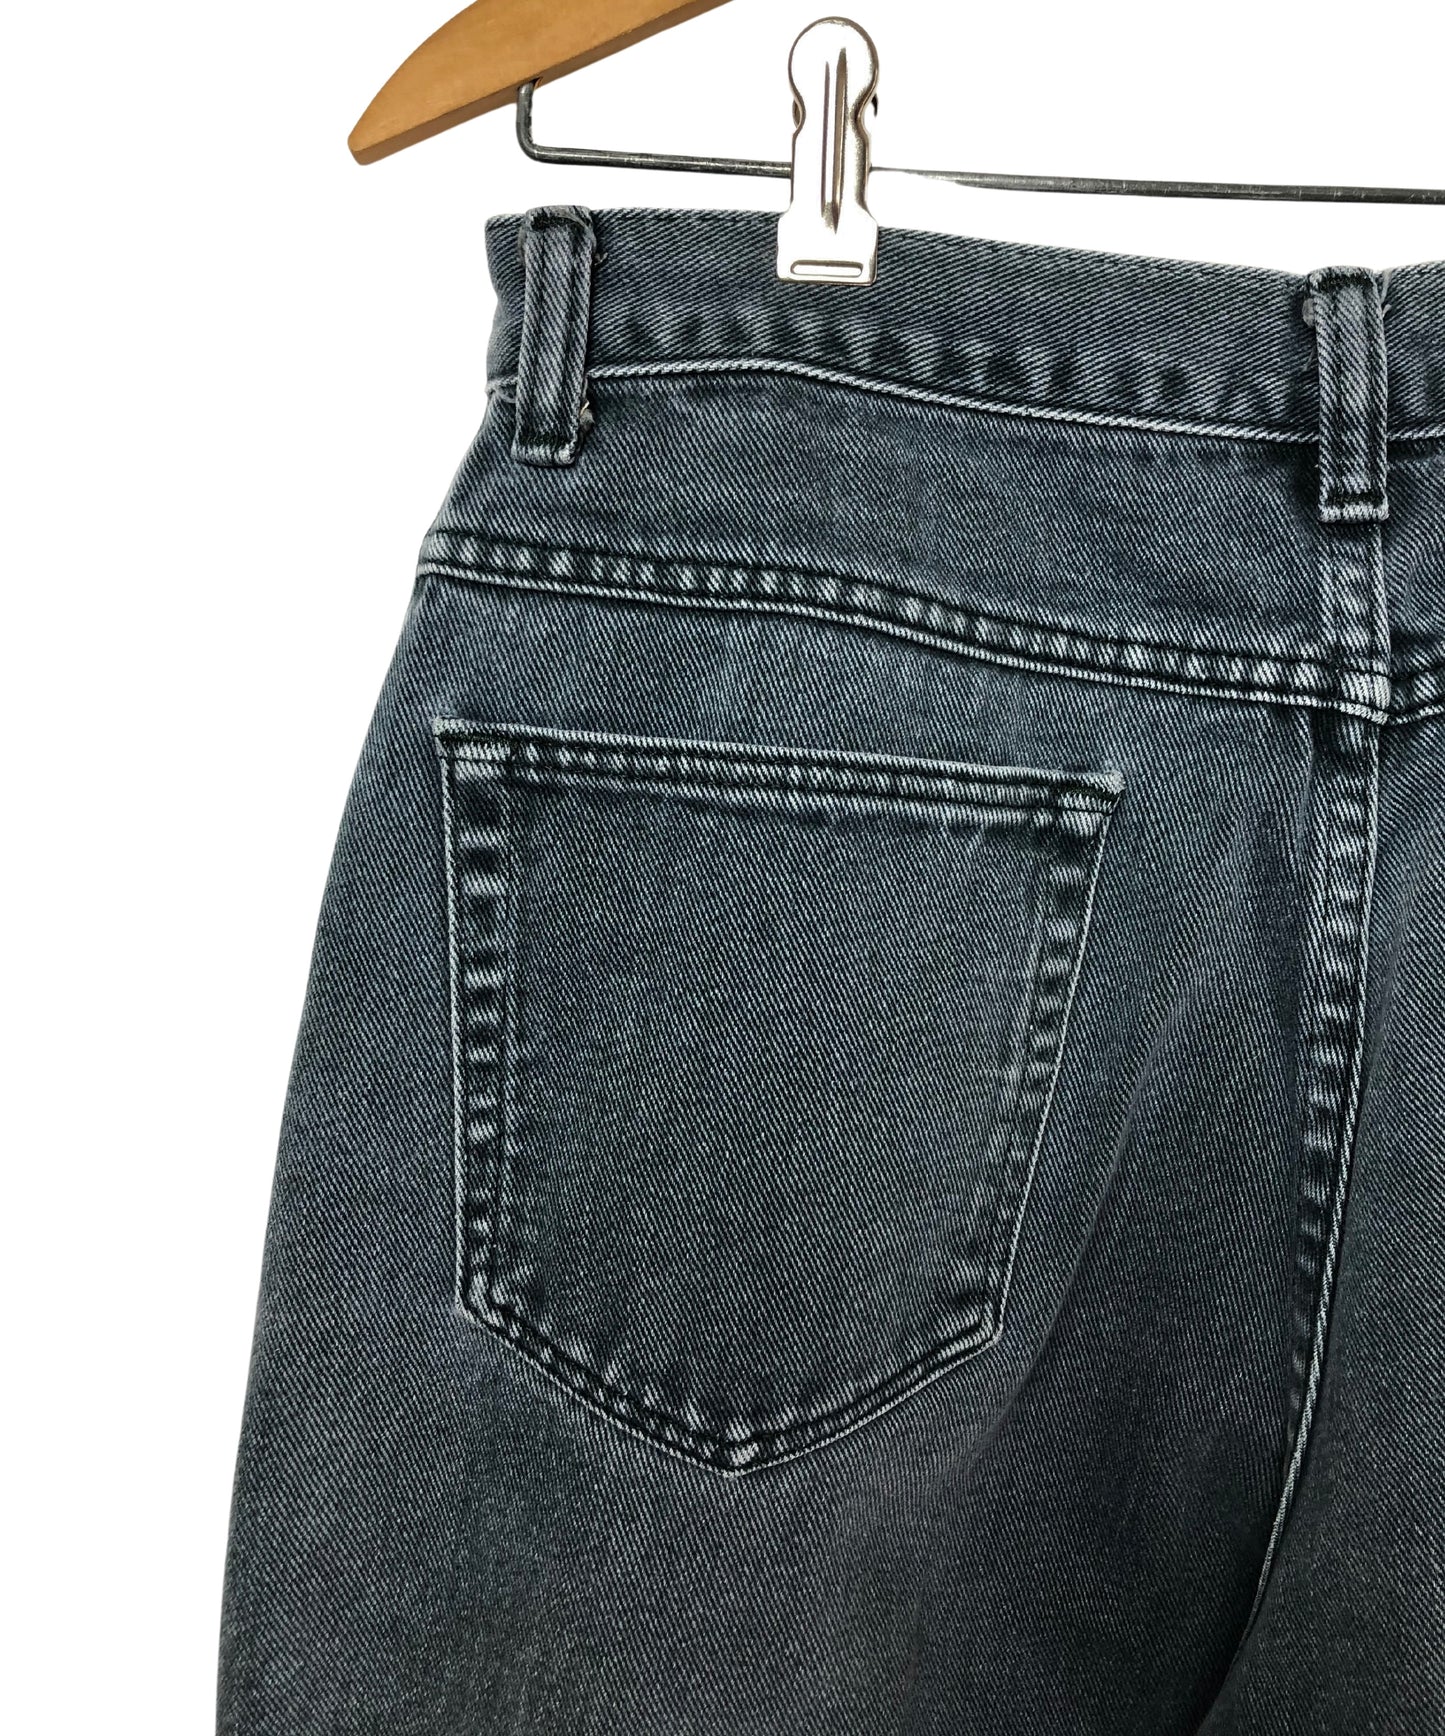 90's Wrangler Gray Wash Jeans Size 12